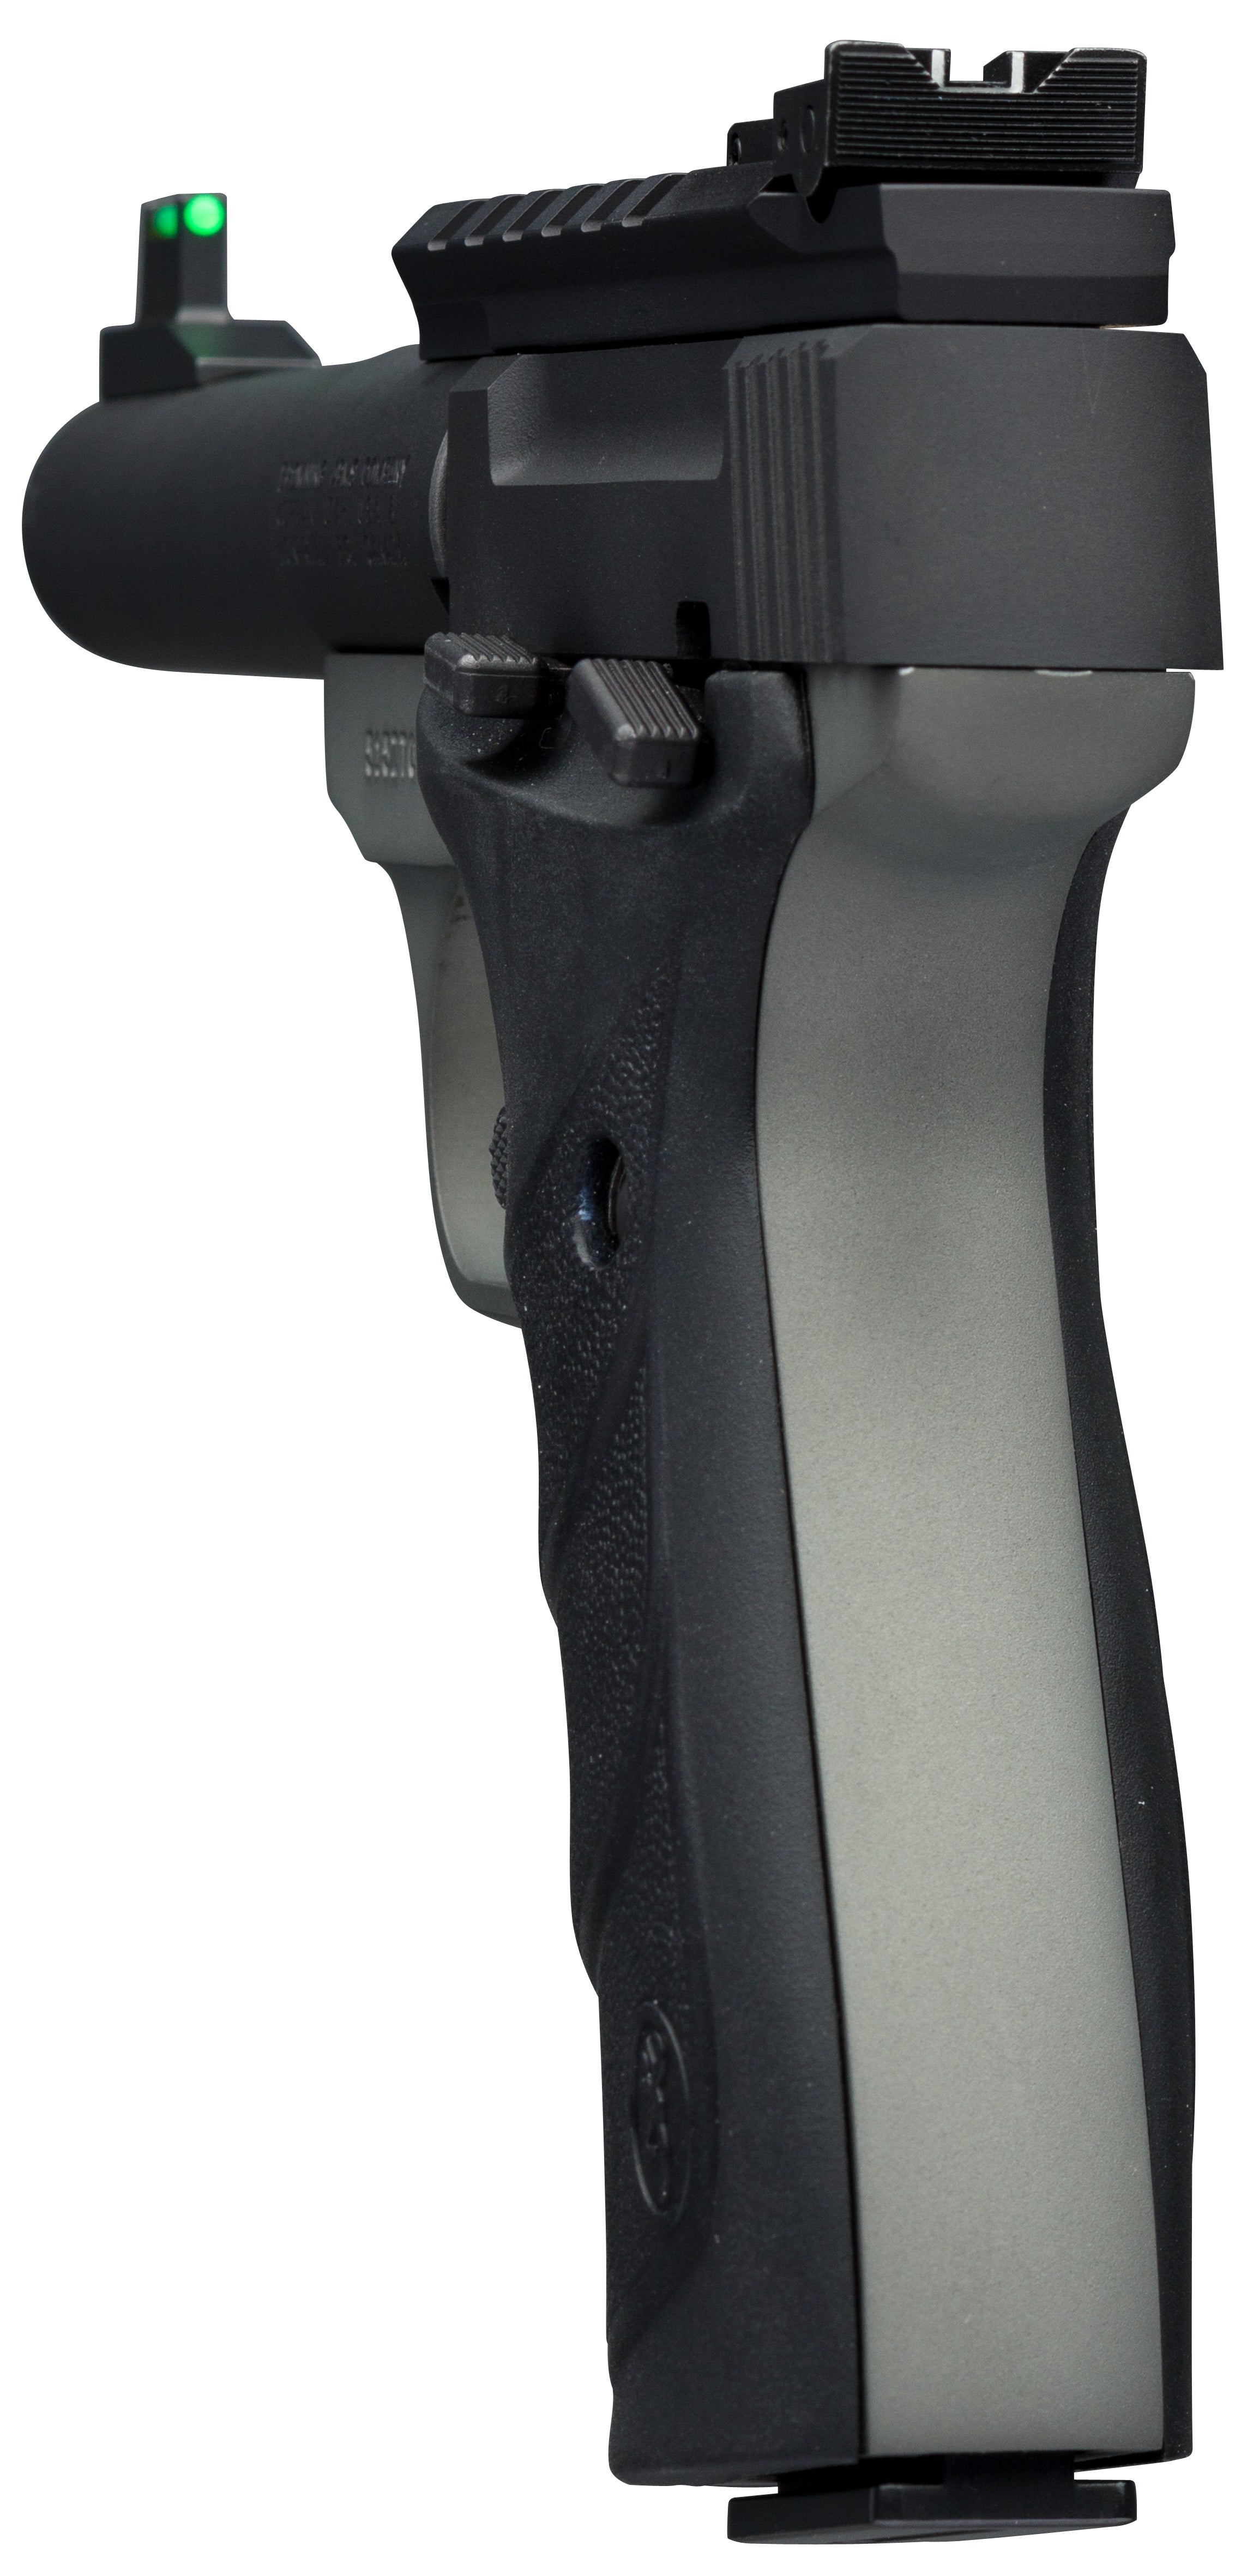 Pistolet Browning Buck Mark URX (2 Joules) - Armurerie Loisir